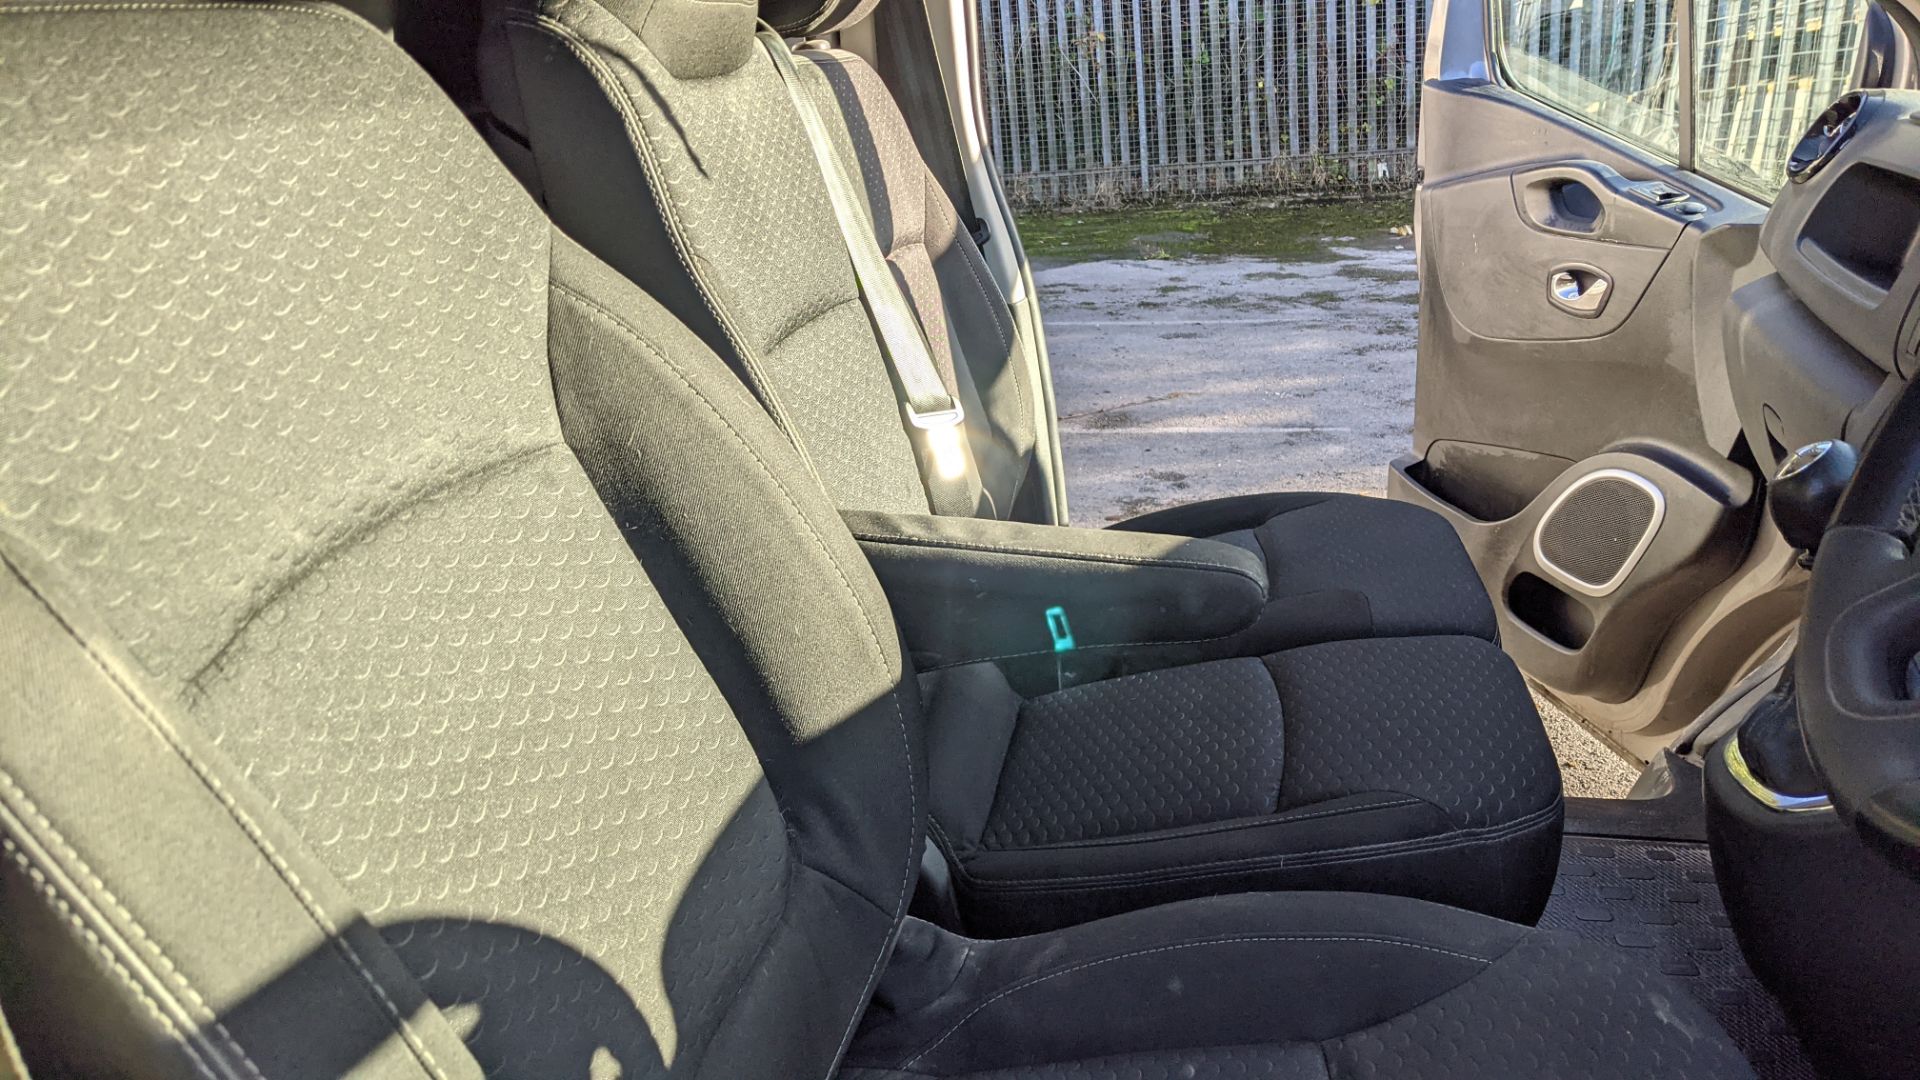 2019 Vauxhall Vivaro L2 2900 Sport CDTI BT SS panel van (Registration FD19 YUB) - Image 51 of 55